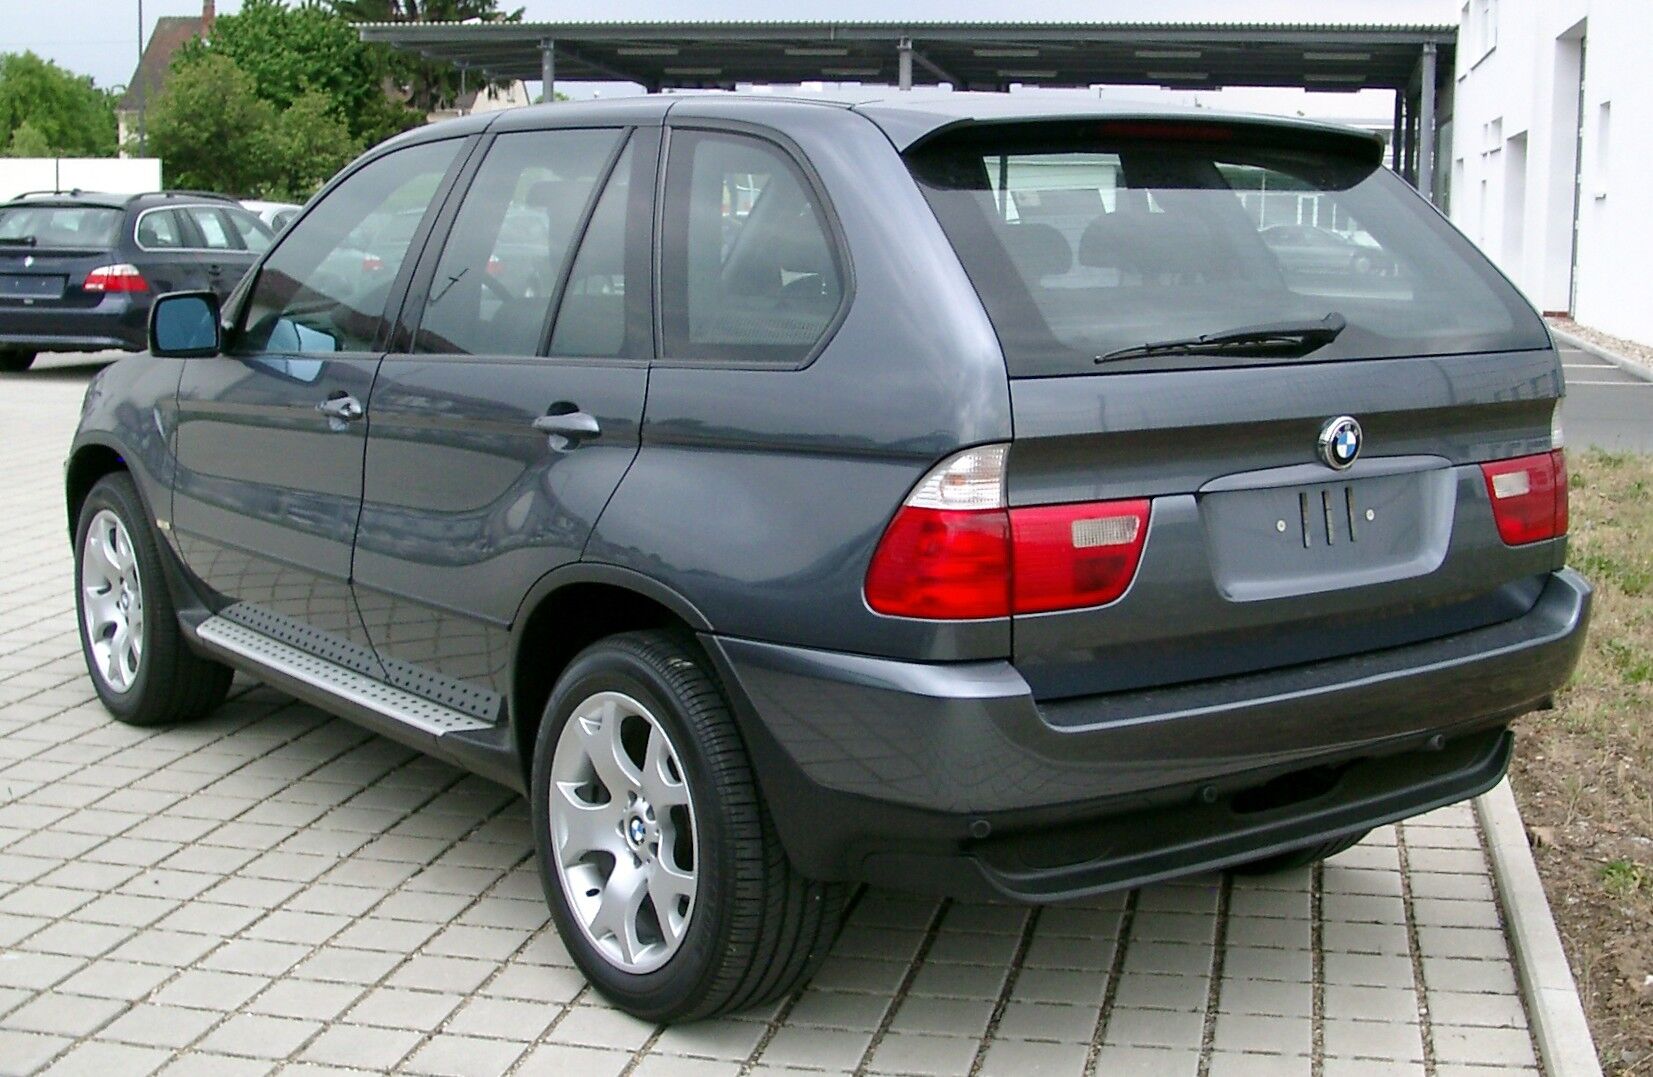 Е53 дизель. БМВ х5 е53. BMW x5 53 кузов. БМВ х5 2005. БМВ х5 е53 2005.